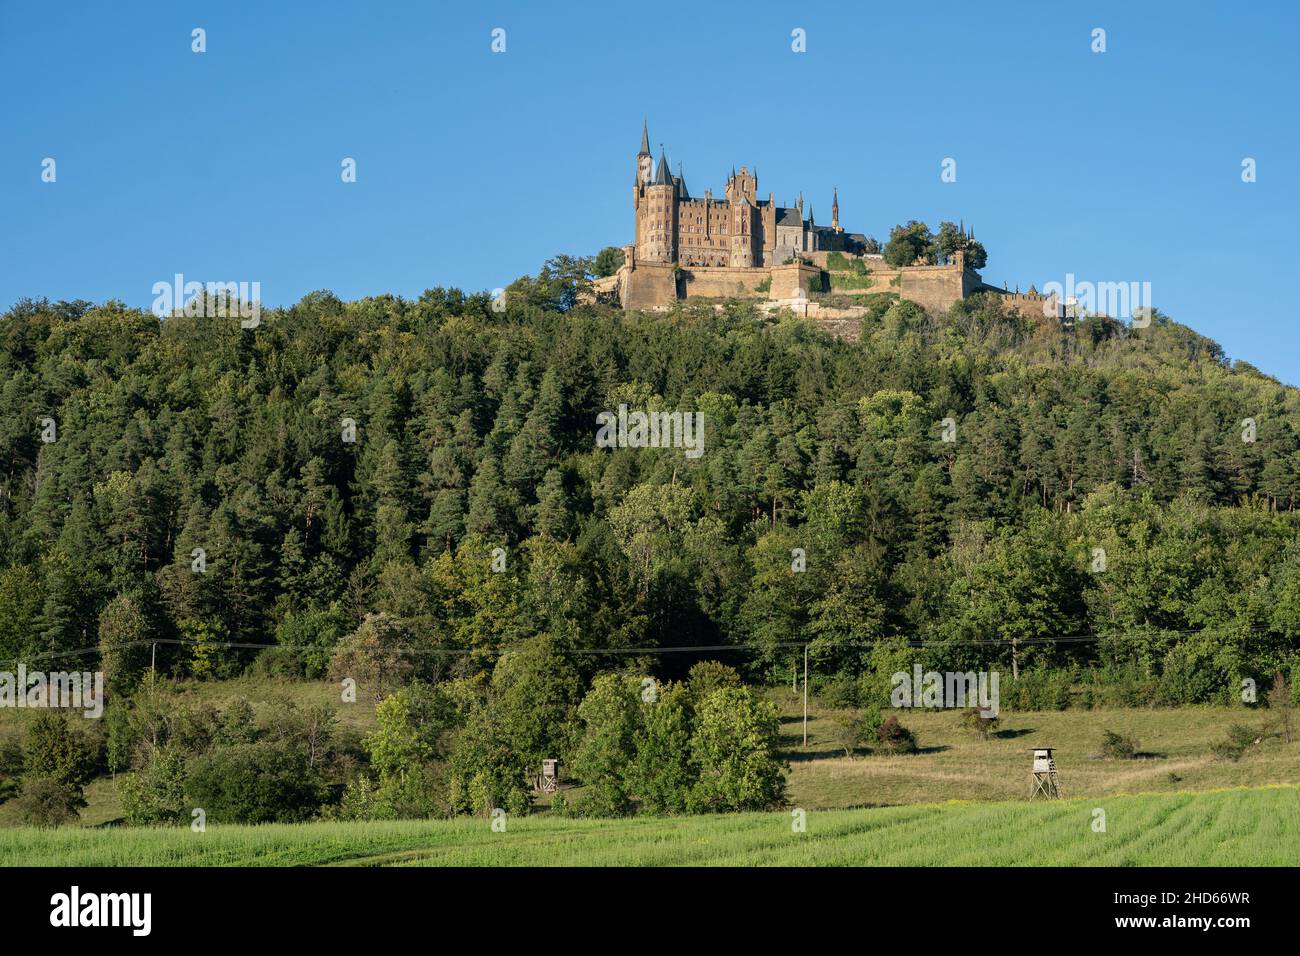 Castle Hohenzollern near Bisingen in the swabian alps, Germany Stock Photo